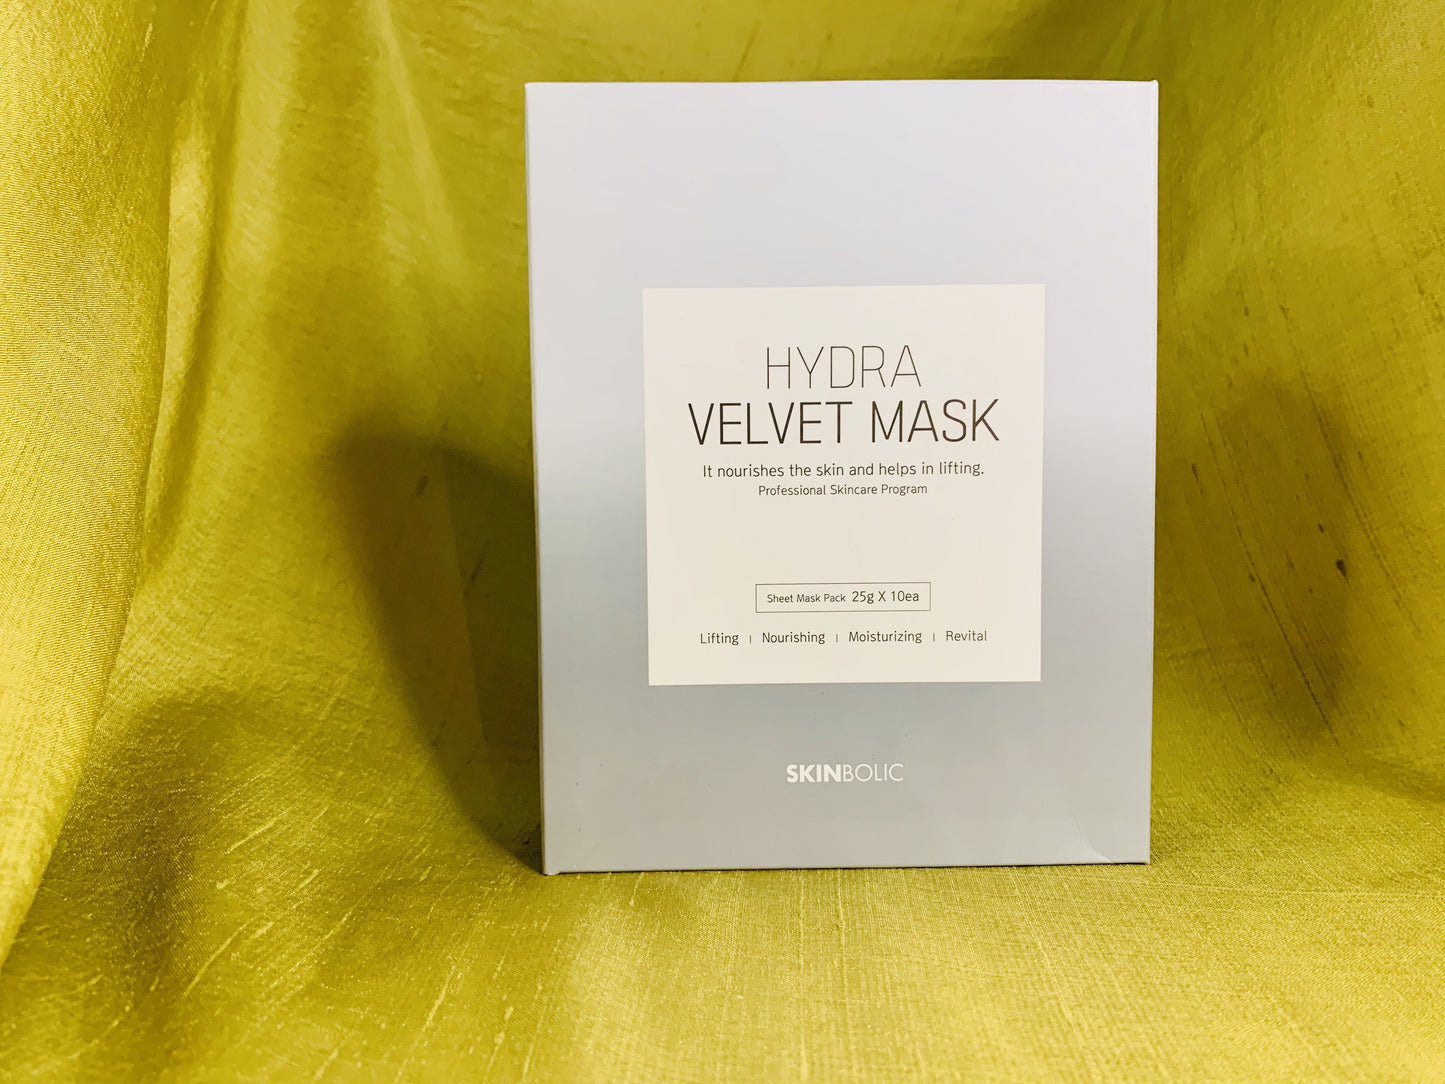 SKINBOLIC Hydra PLLA Velvet Mask, 5 and 10 Pack